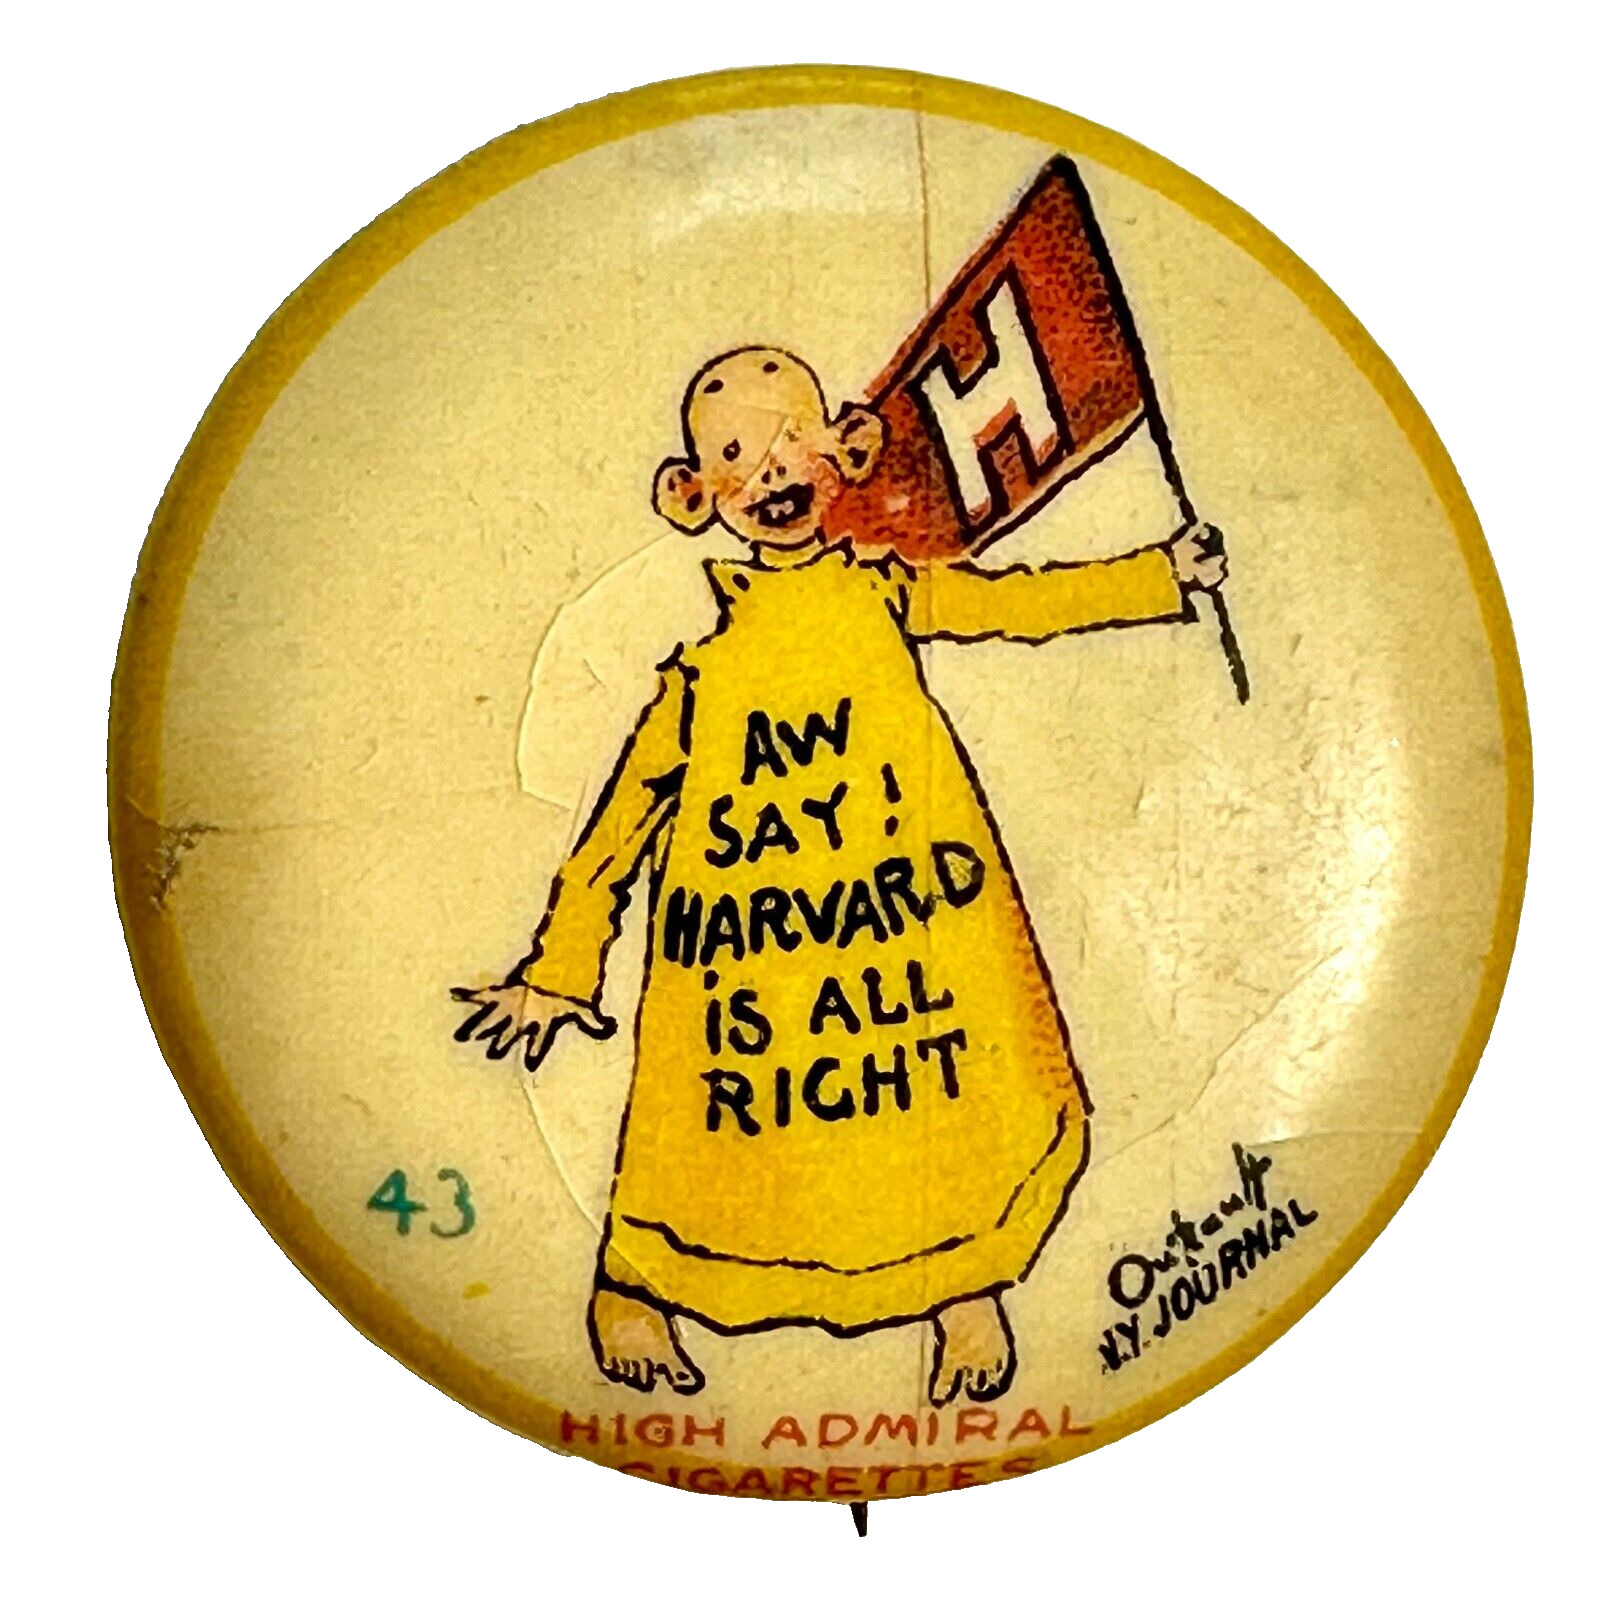 1896 High Admiral Cigarettes Yellow Kid 43 Outcault Pinback Button HARVARD